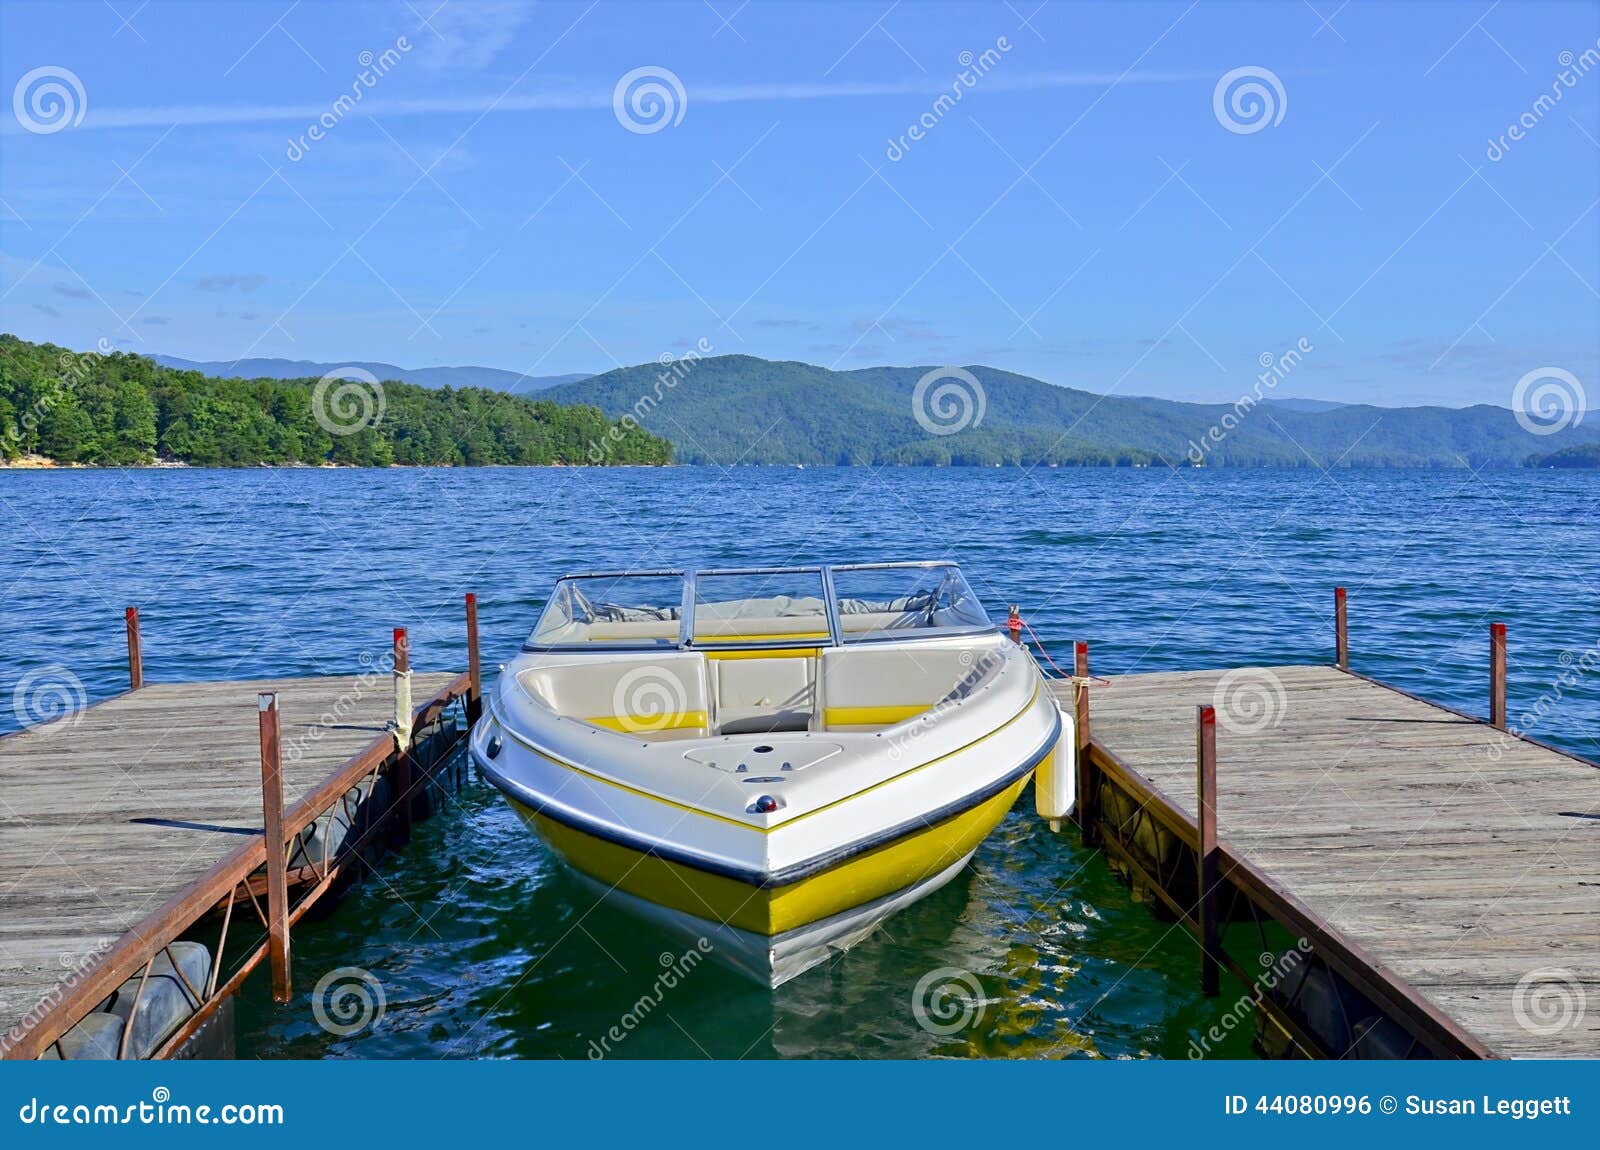 yellow boat at dock on a lake